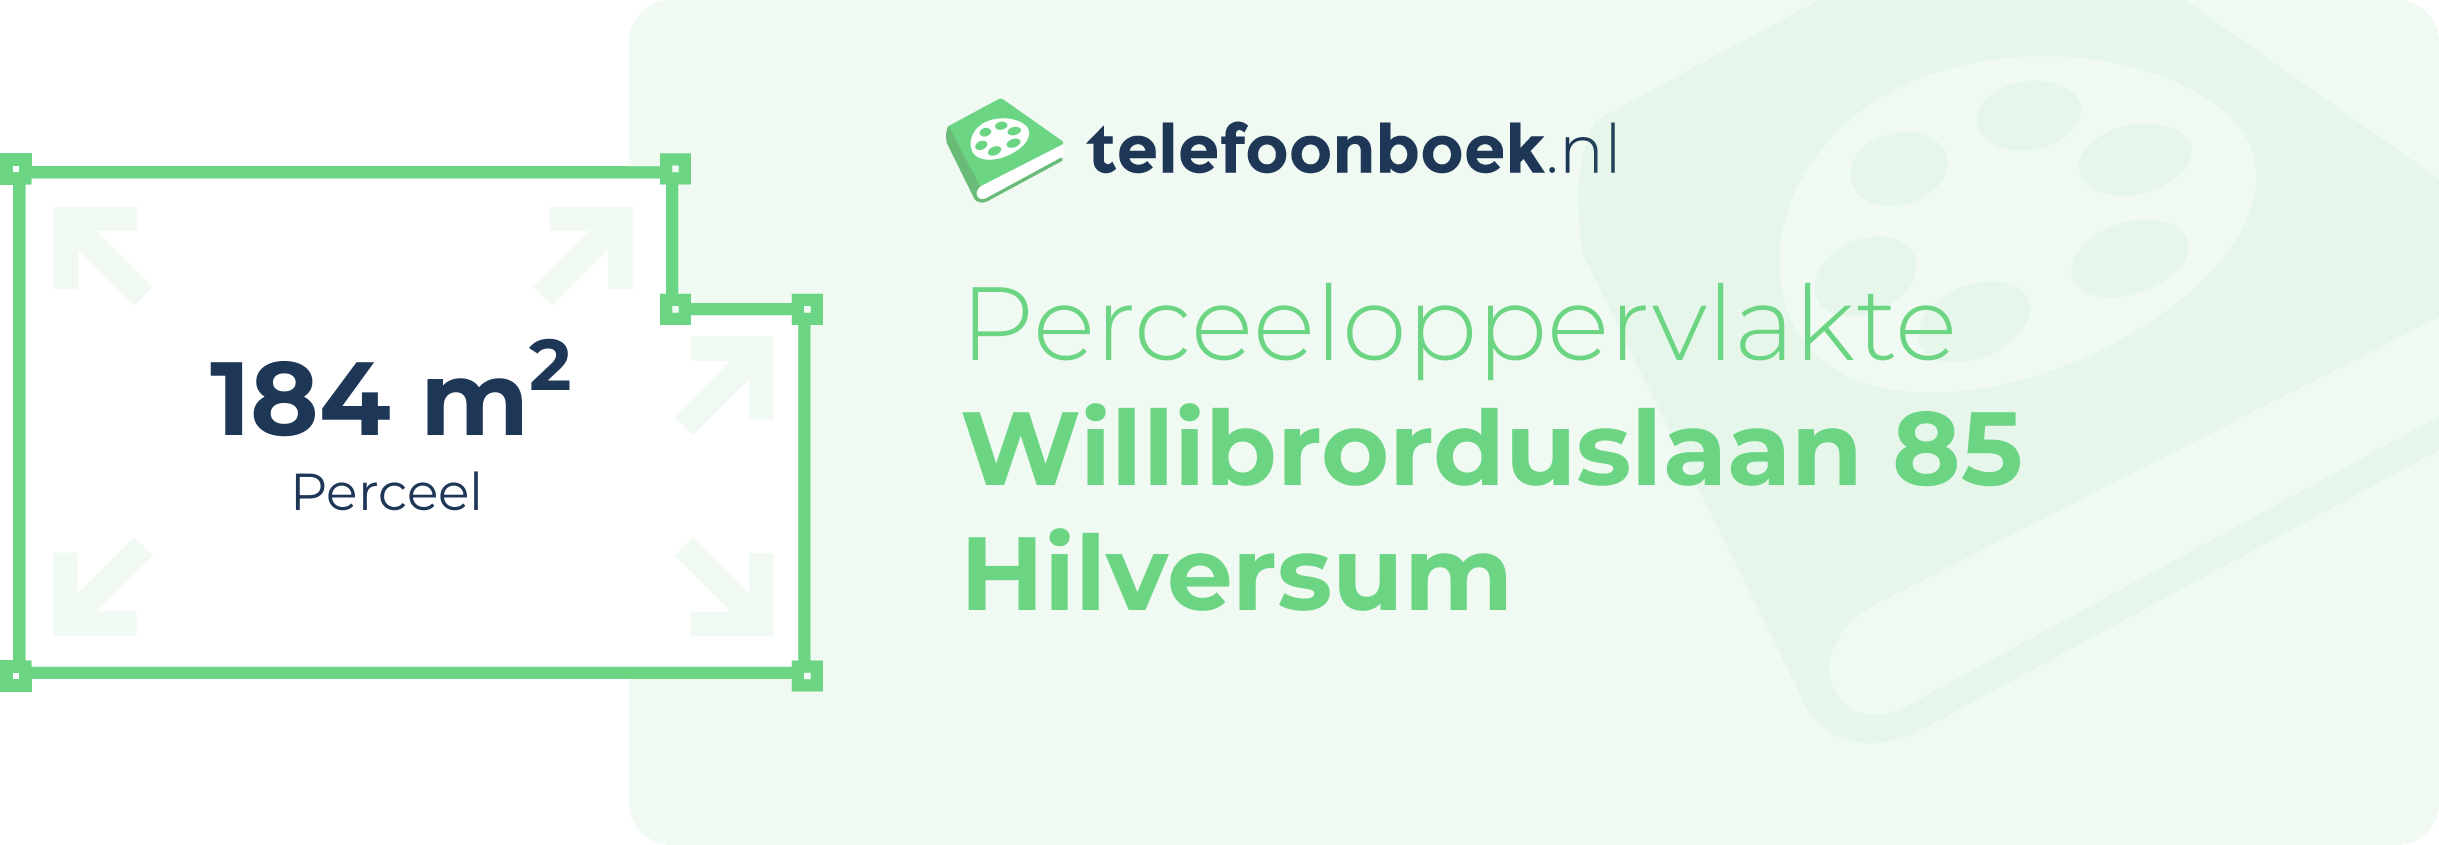 Perceeloppervlakte Willibrorduslaan 85 Hilversum